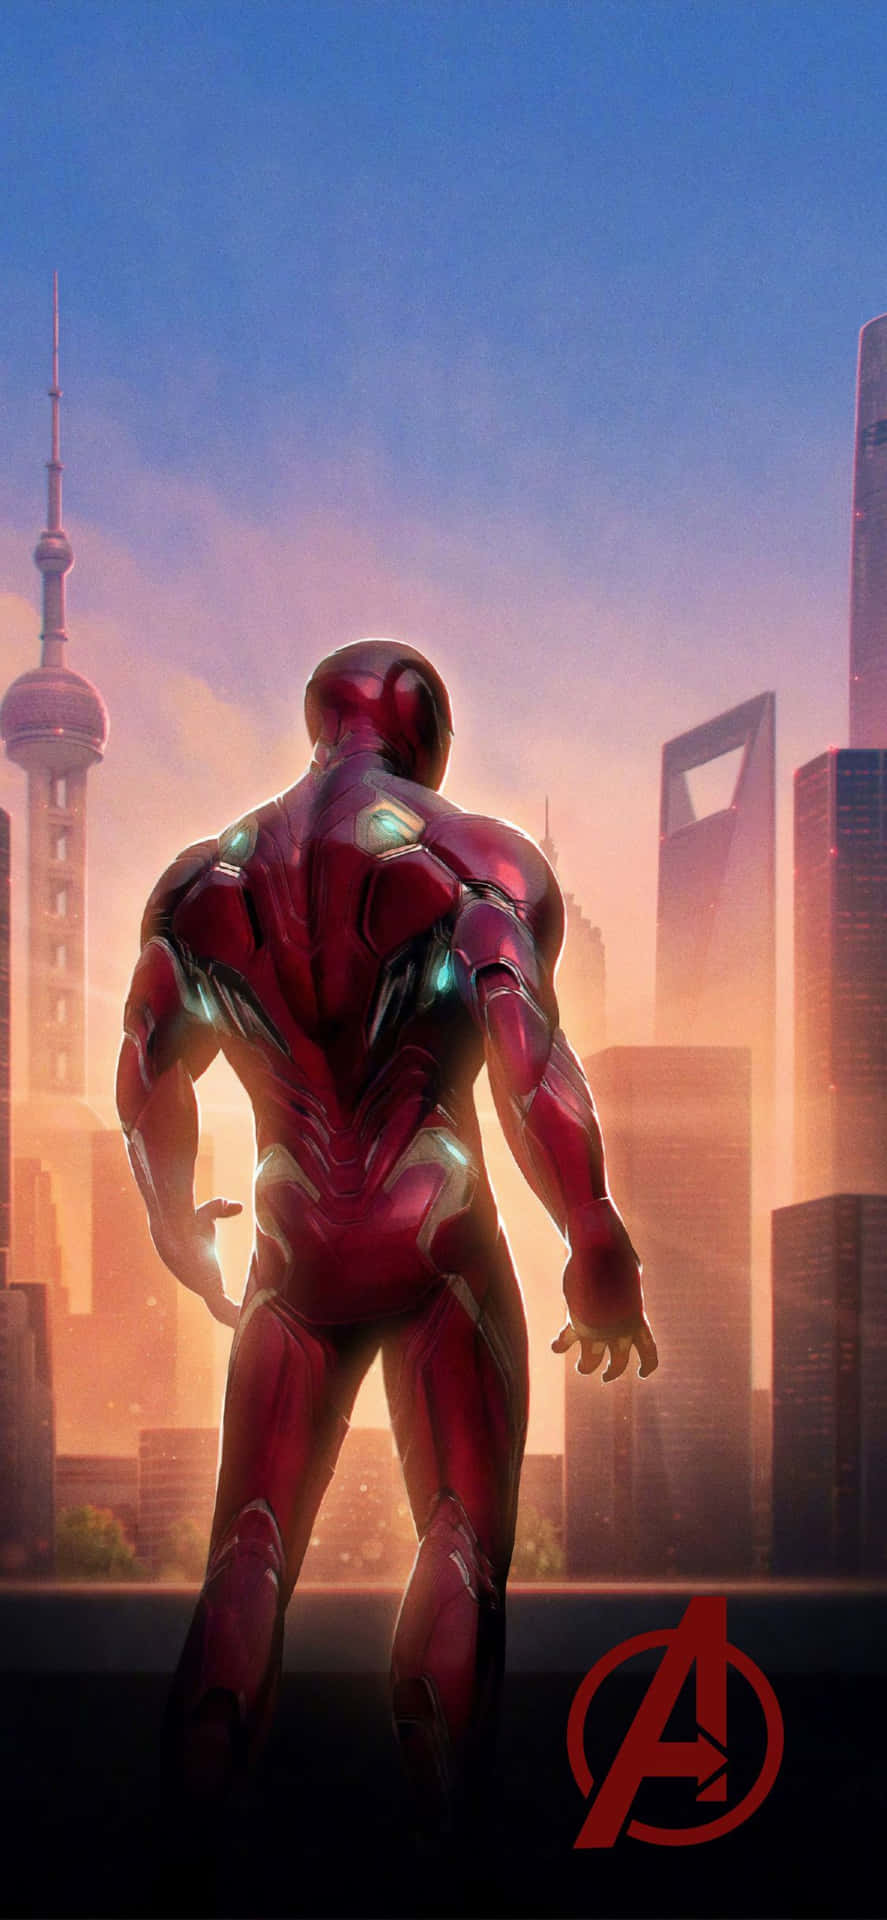 Iphonexs Bakgrundsbild Av Iron Man I Nyc Från Avengers.